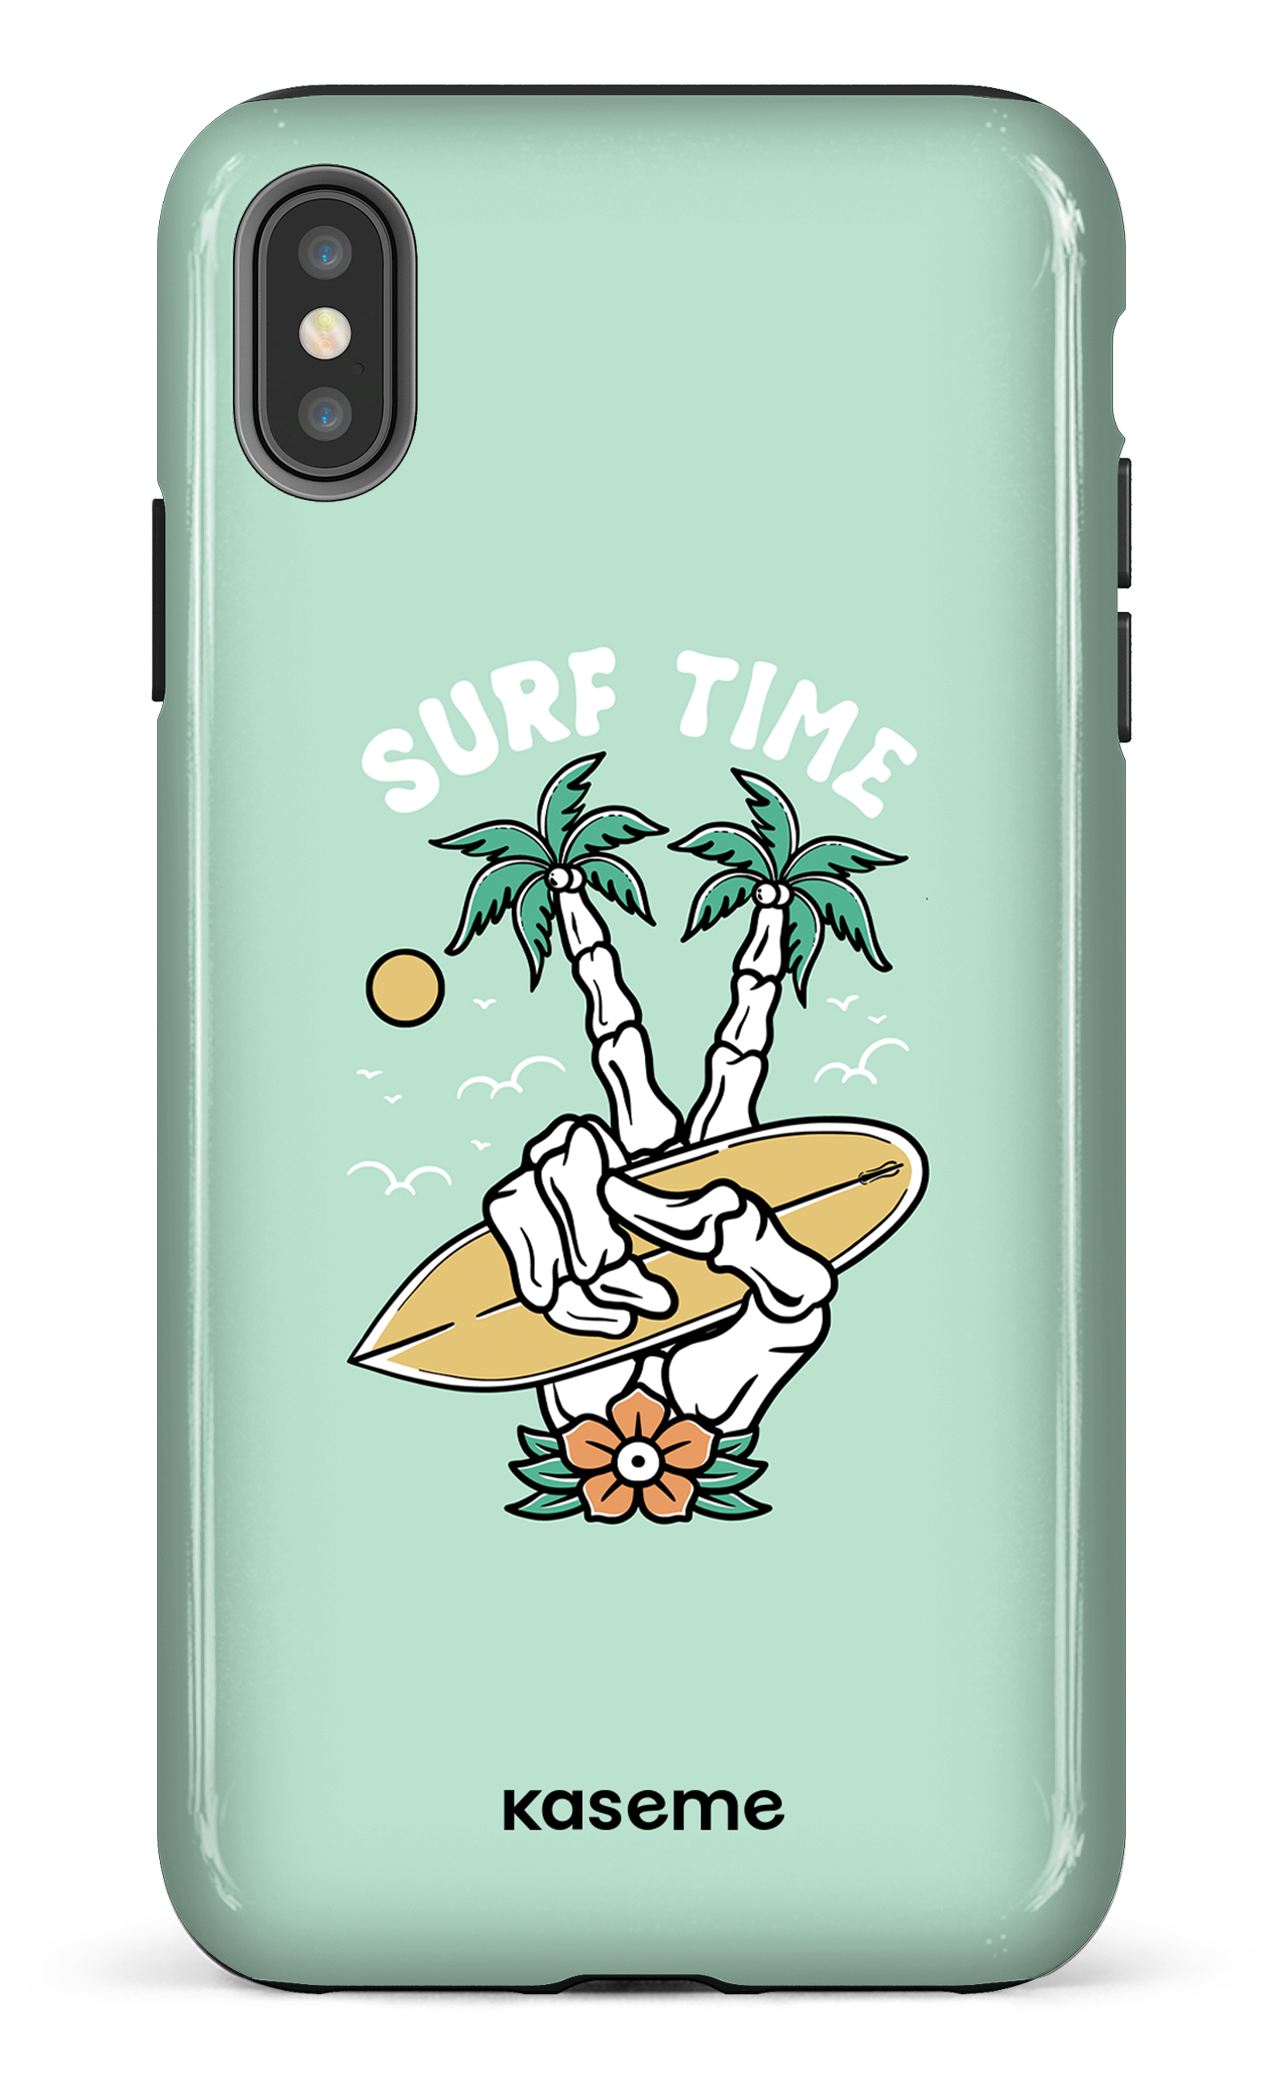 Surfboard - iPhone XS Max